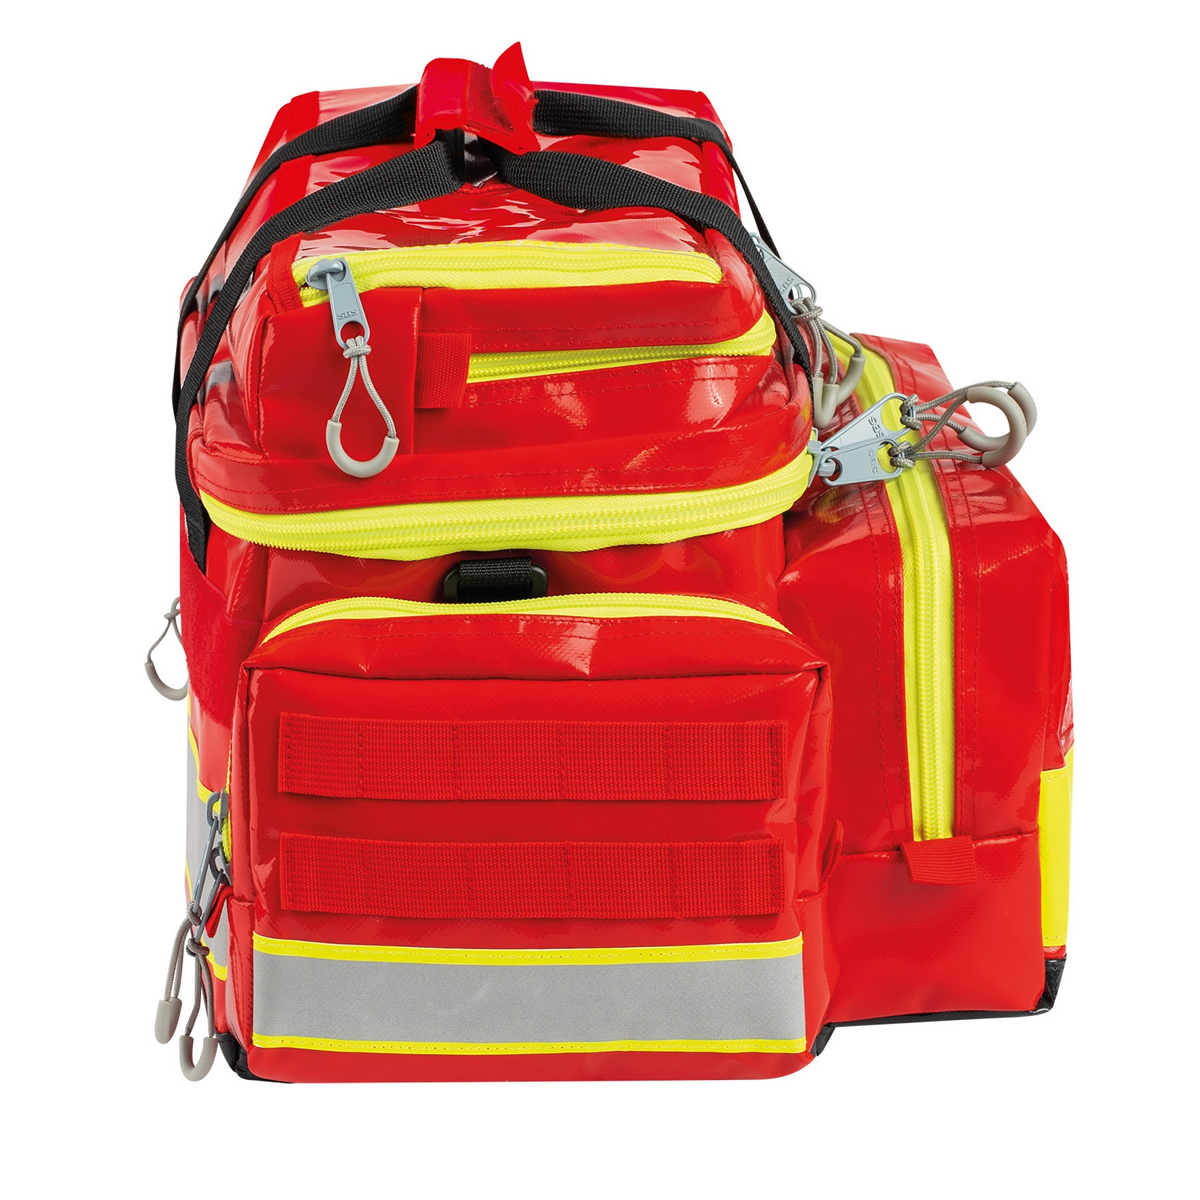 Lifebags Notfalltasche M - tagesleuchtgelb